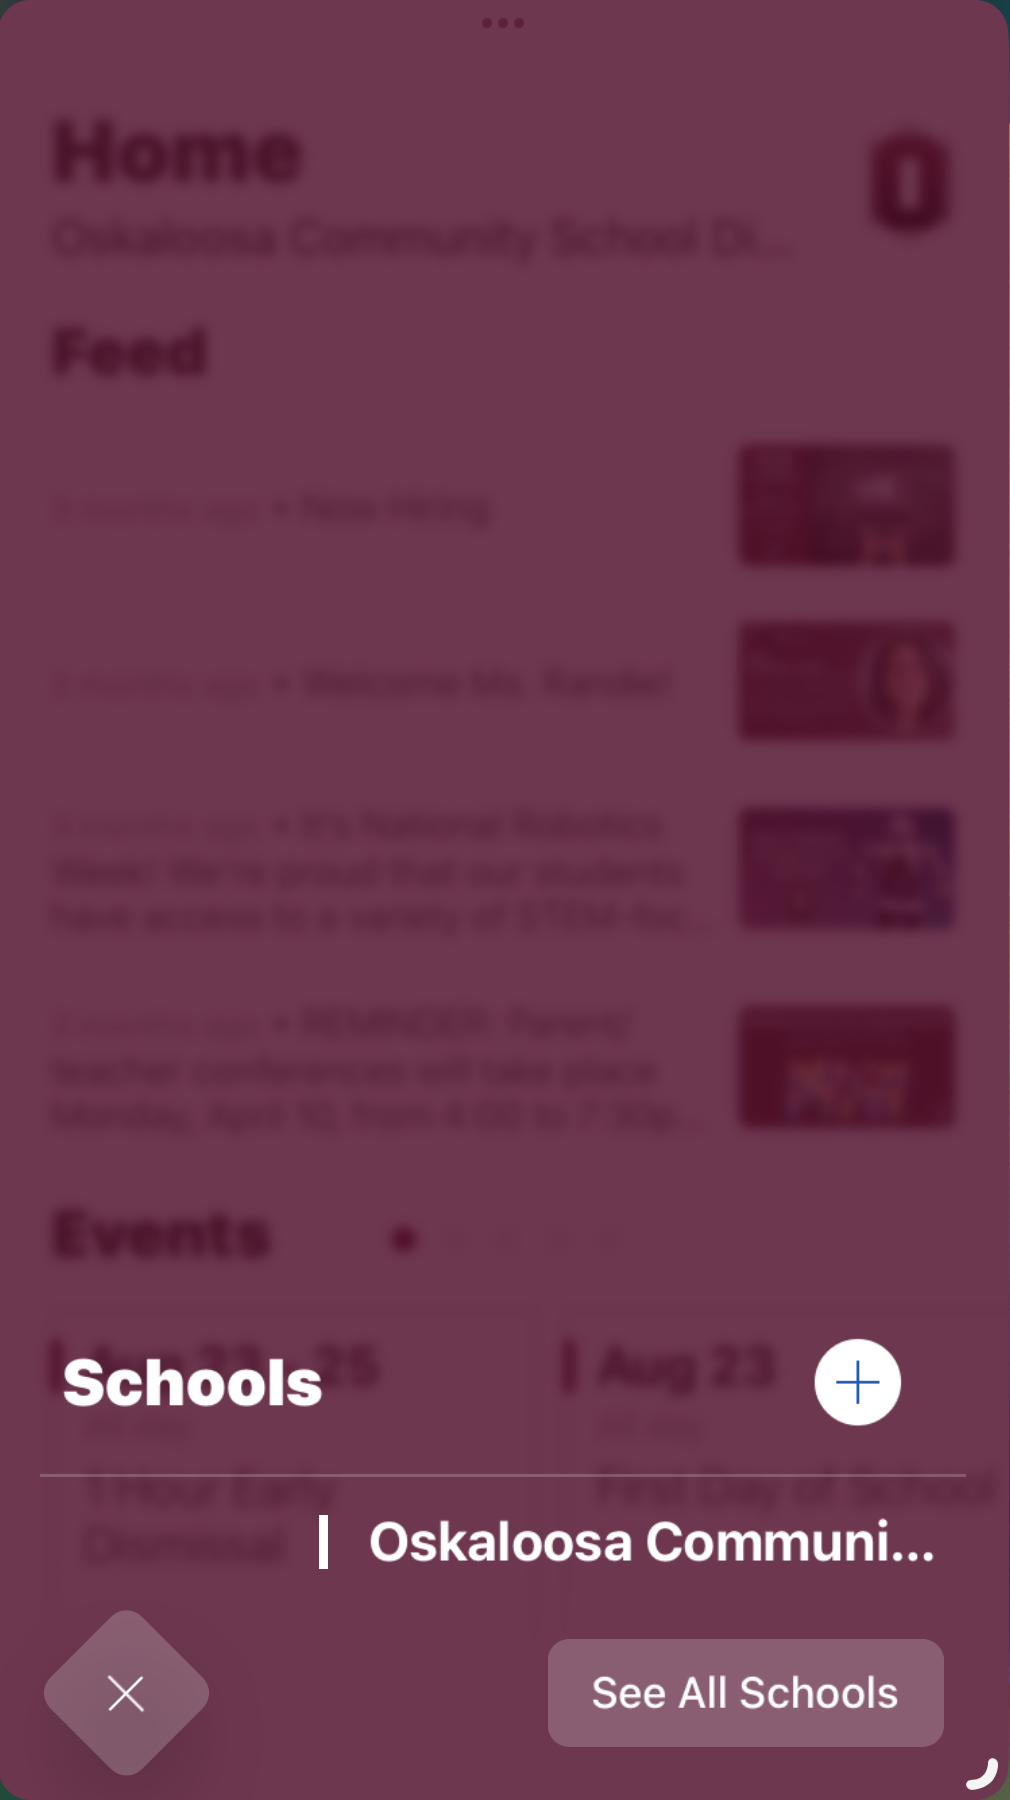 Schools - see all schools